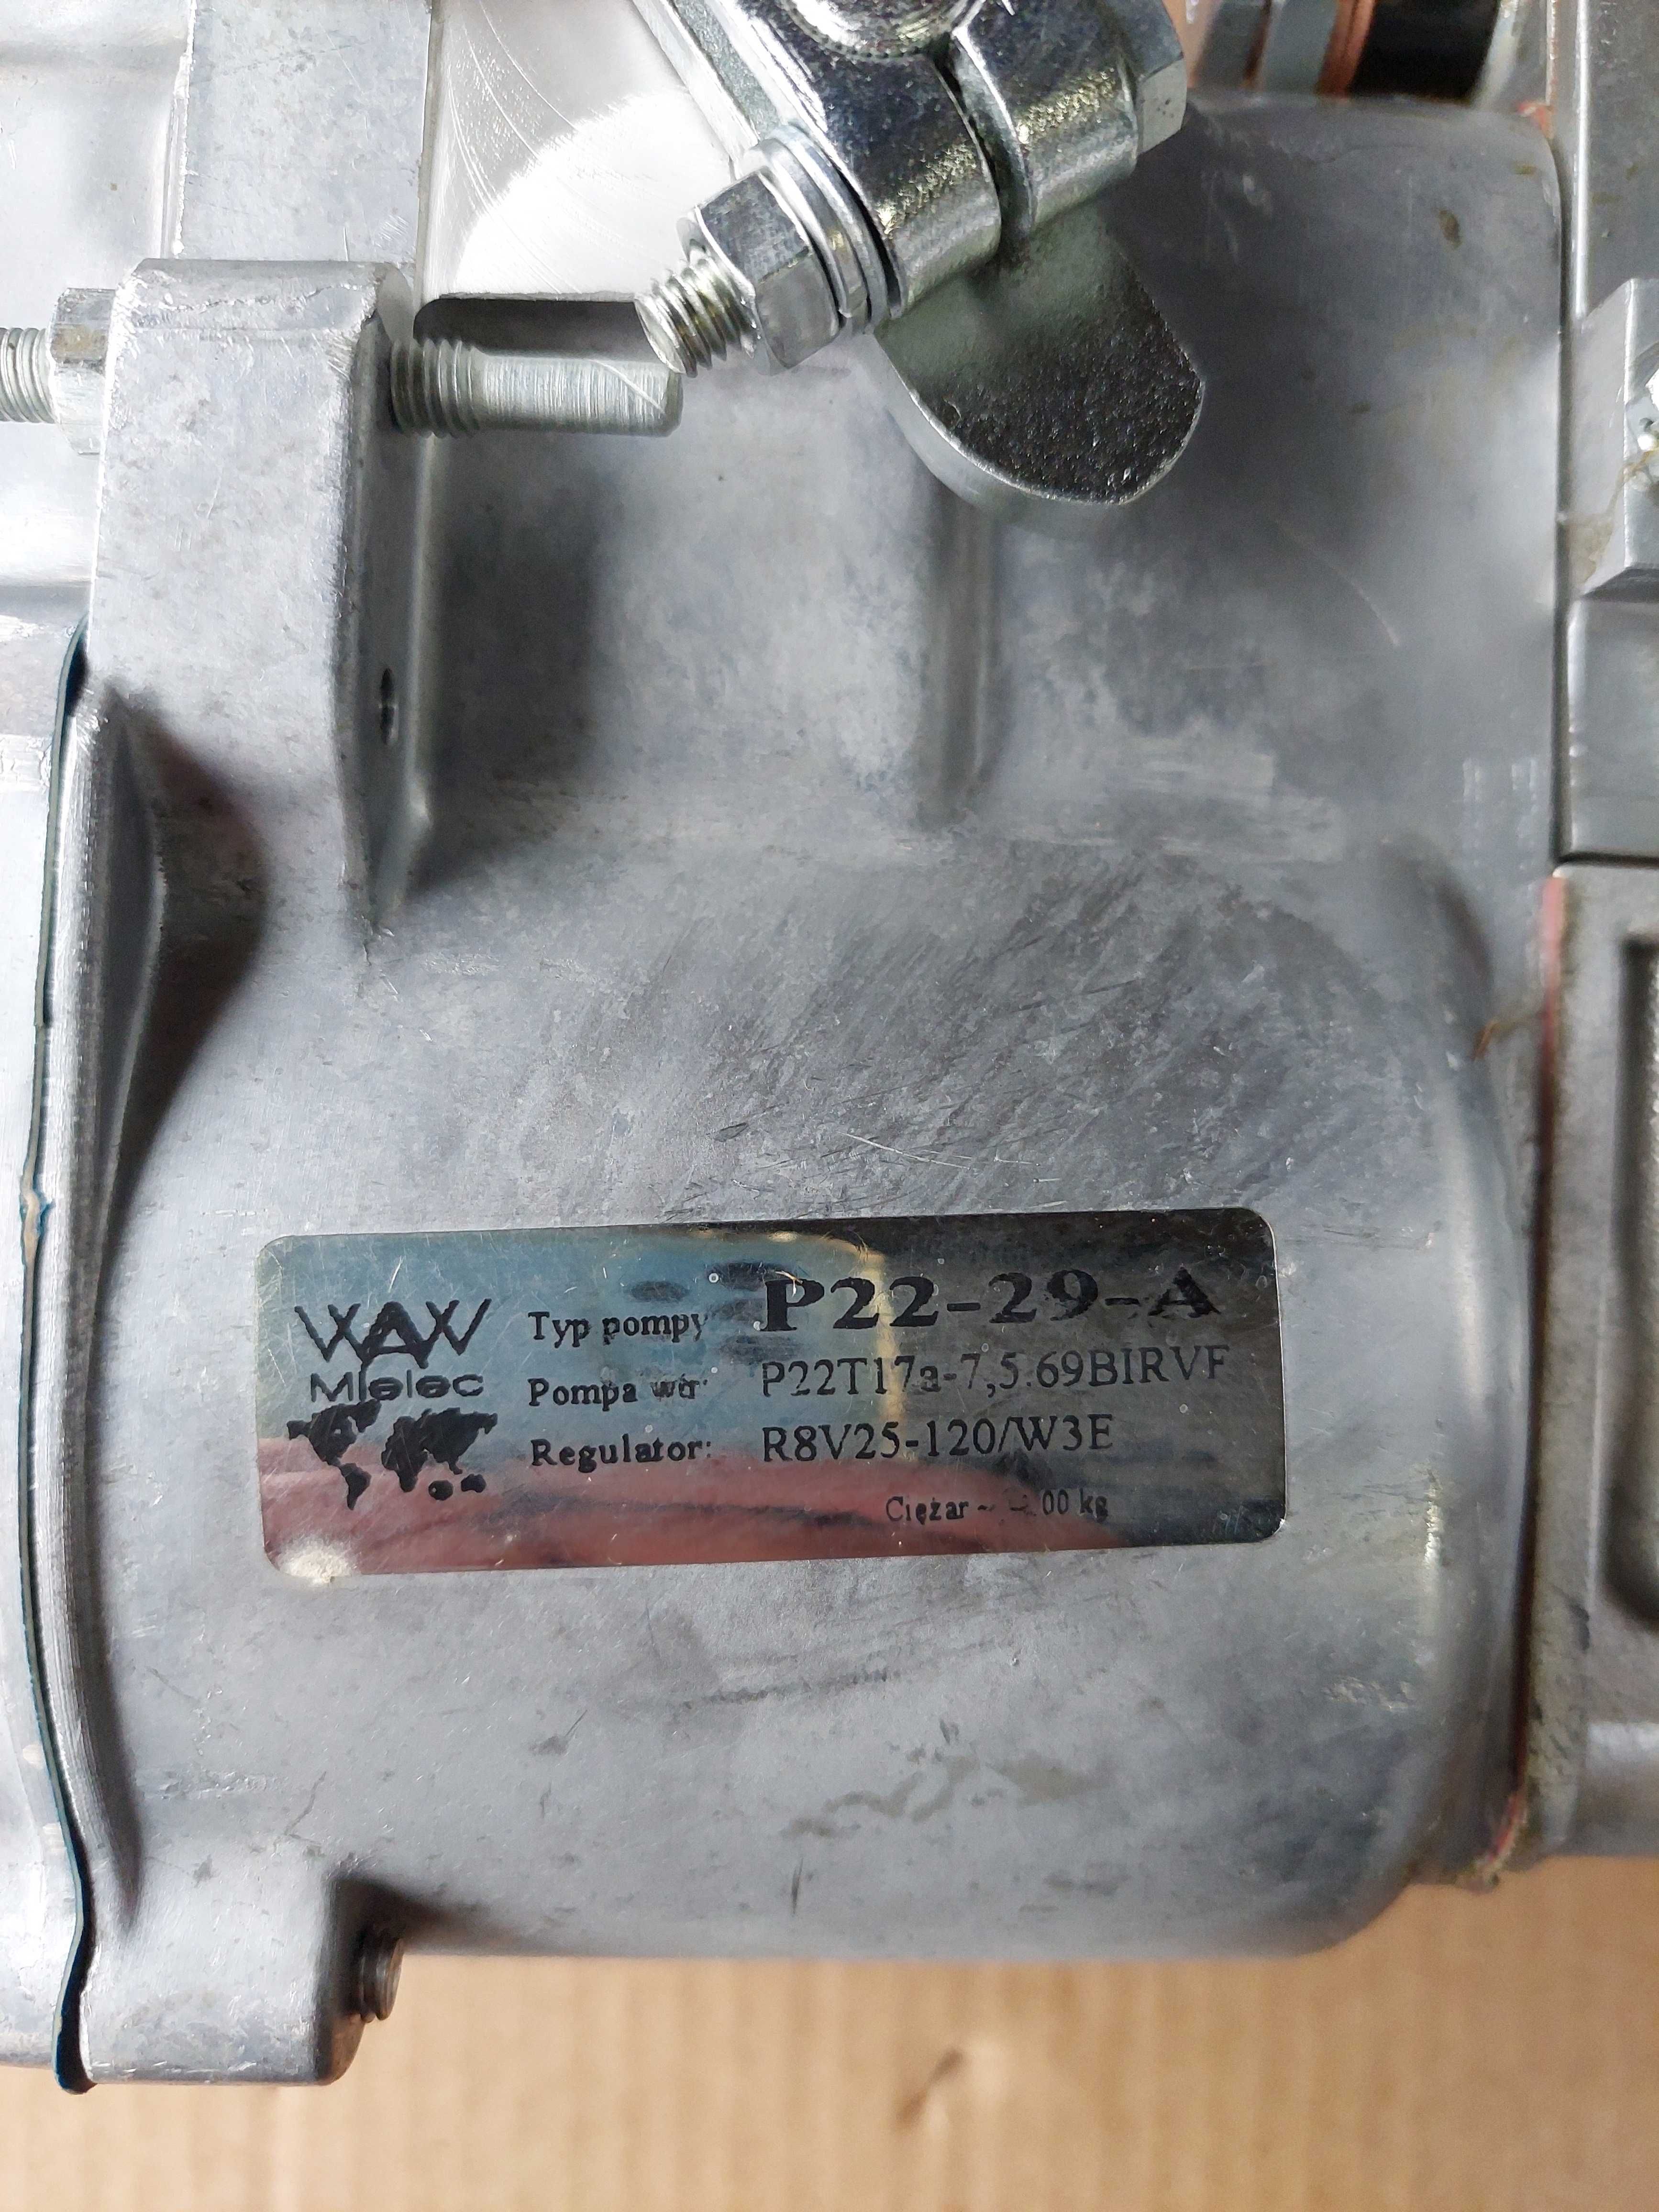 Pompa wtryskowa C-330 P22-29A 42.15.2206